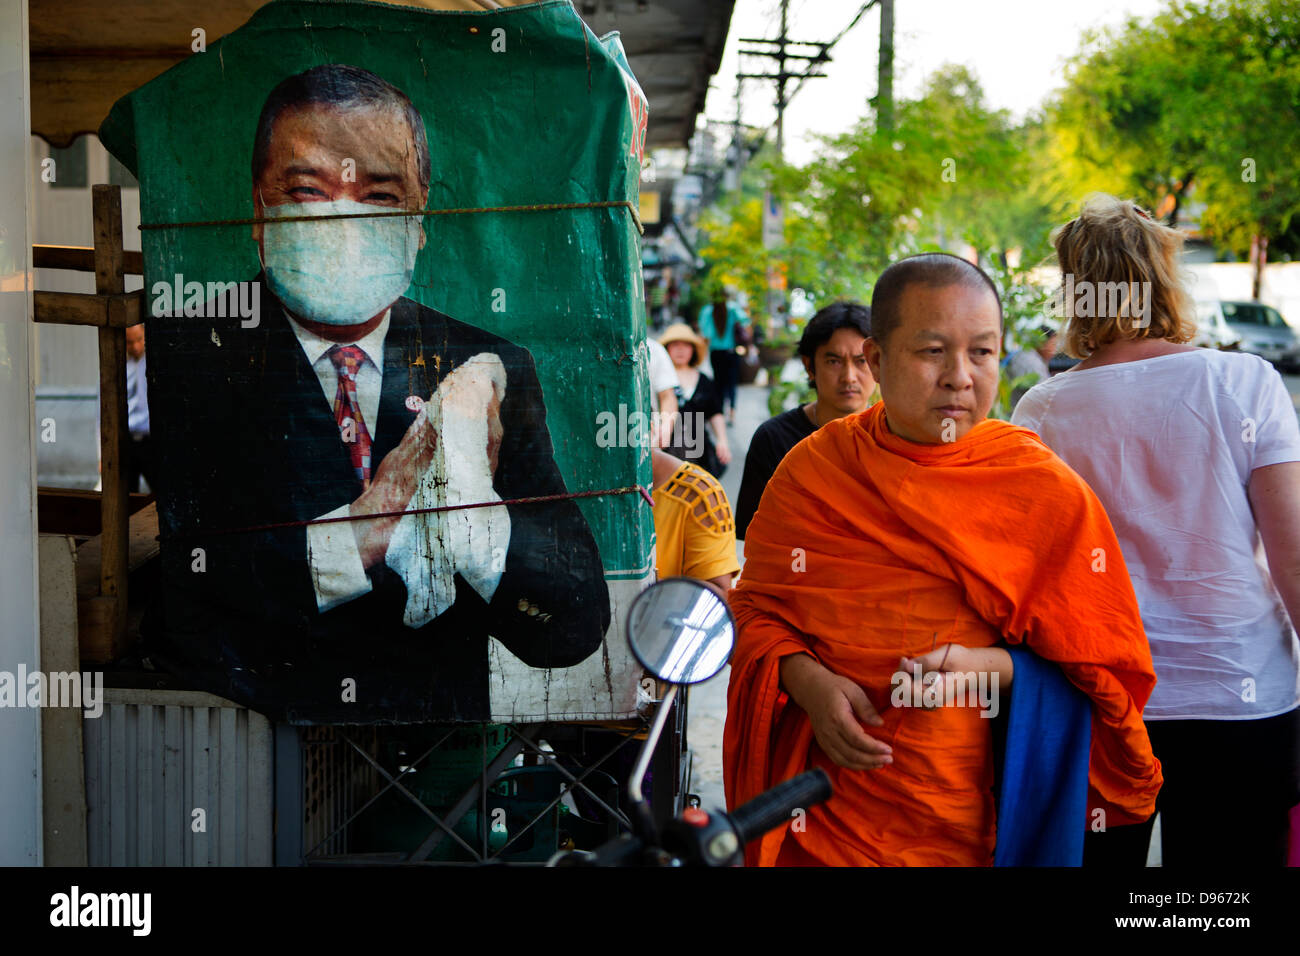 Monje budista pasando street poster de hombre que llevaba máscara higiénica Foto de stock